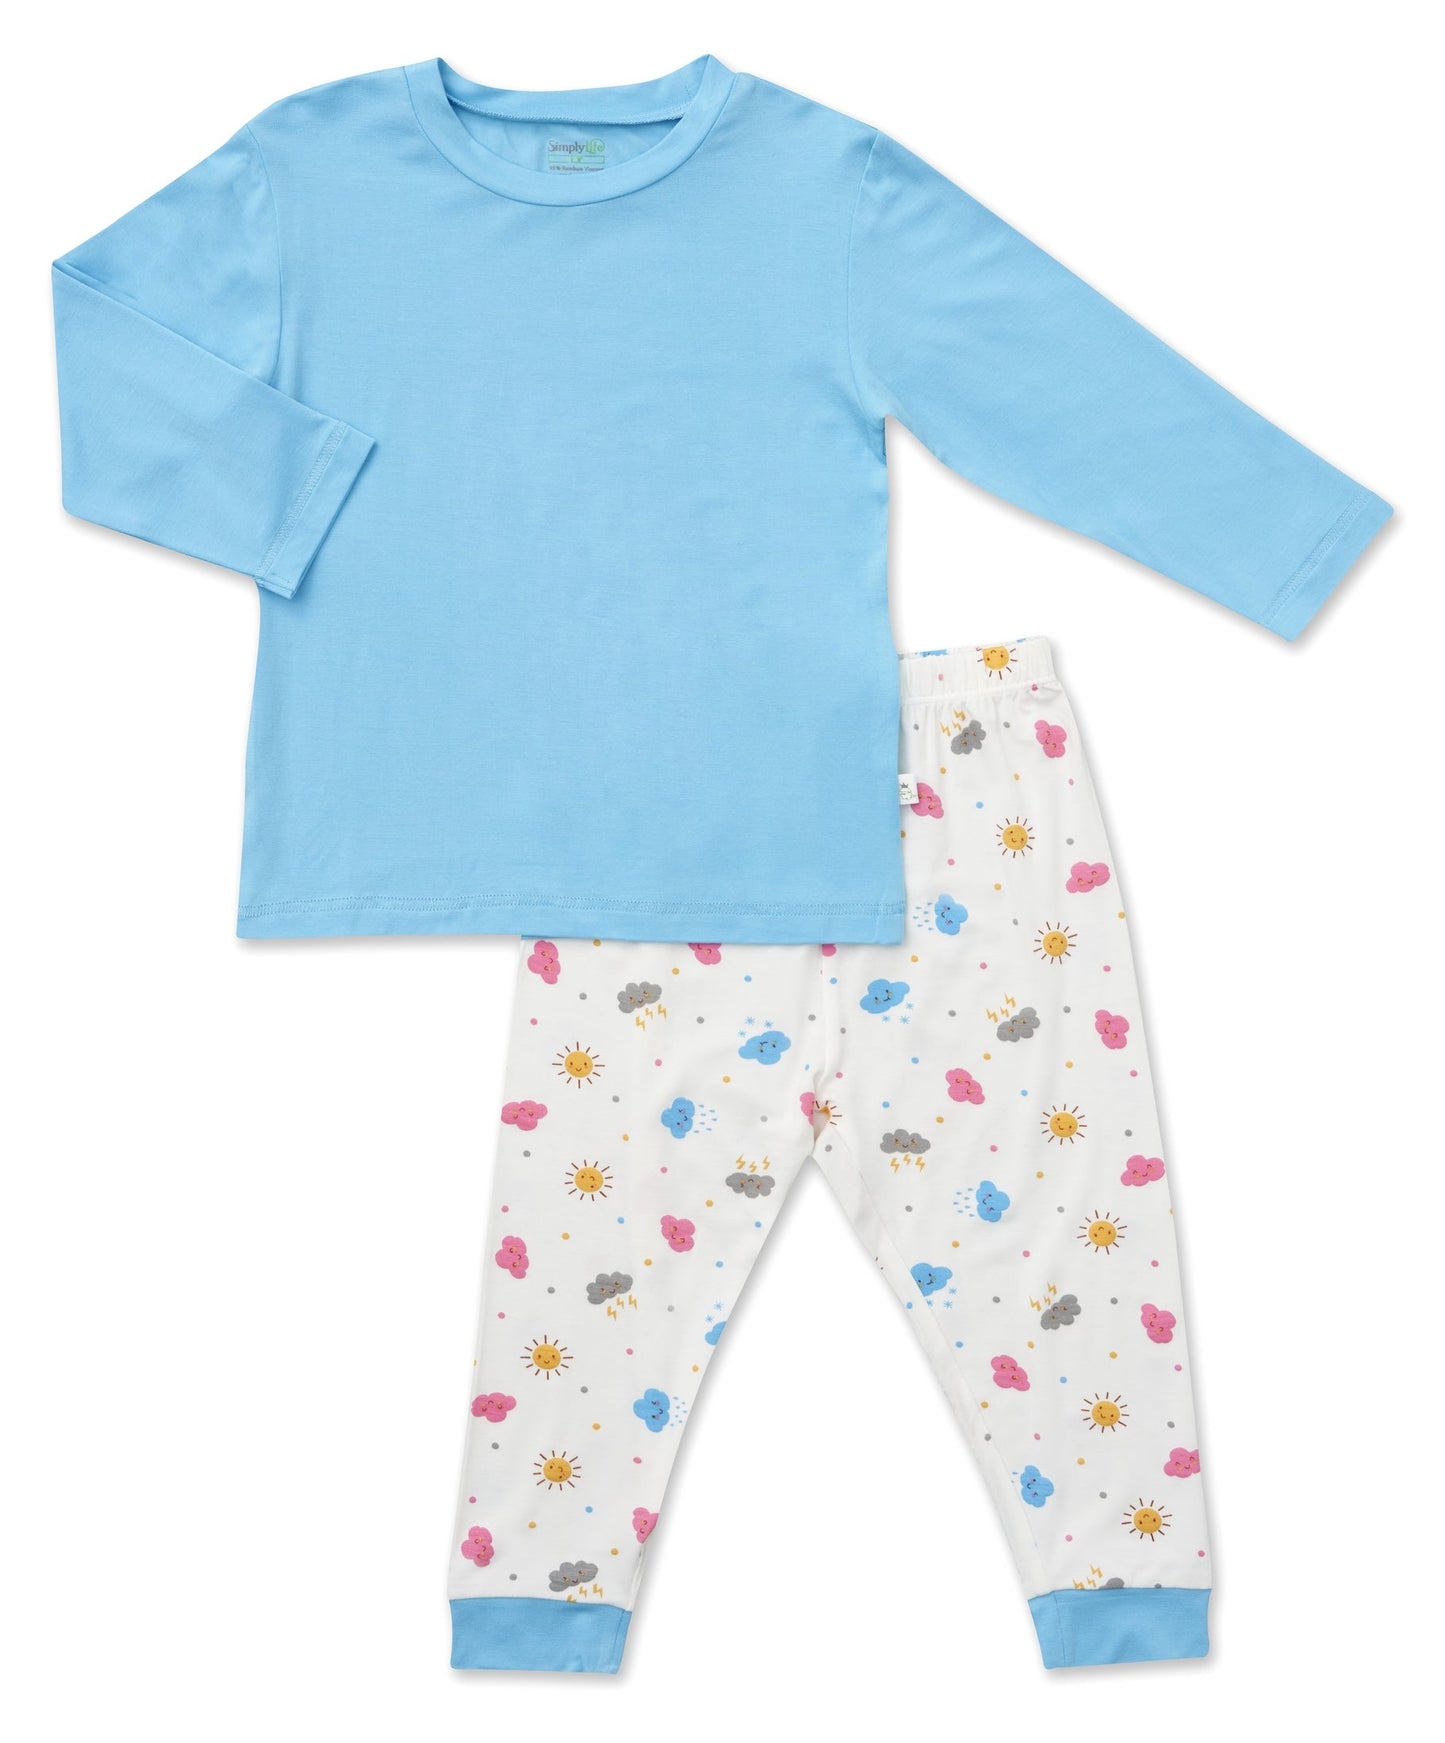 Kids Long-sleeve Bamboo Pyjamas Set (Solid Colour Tops)